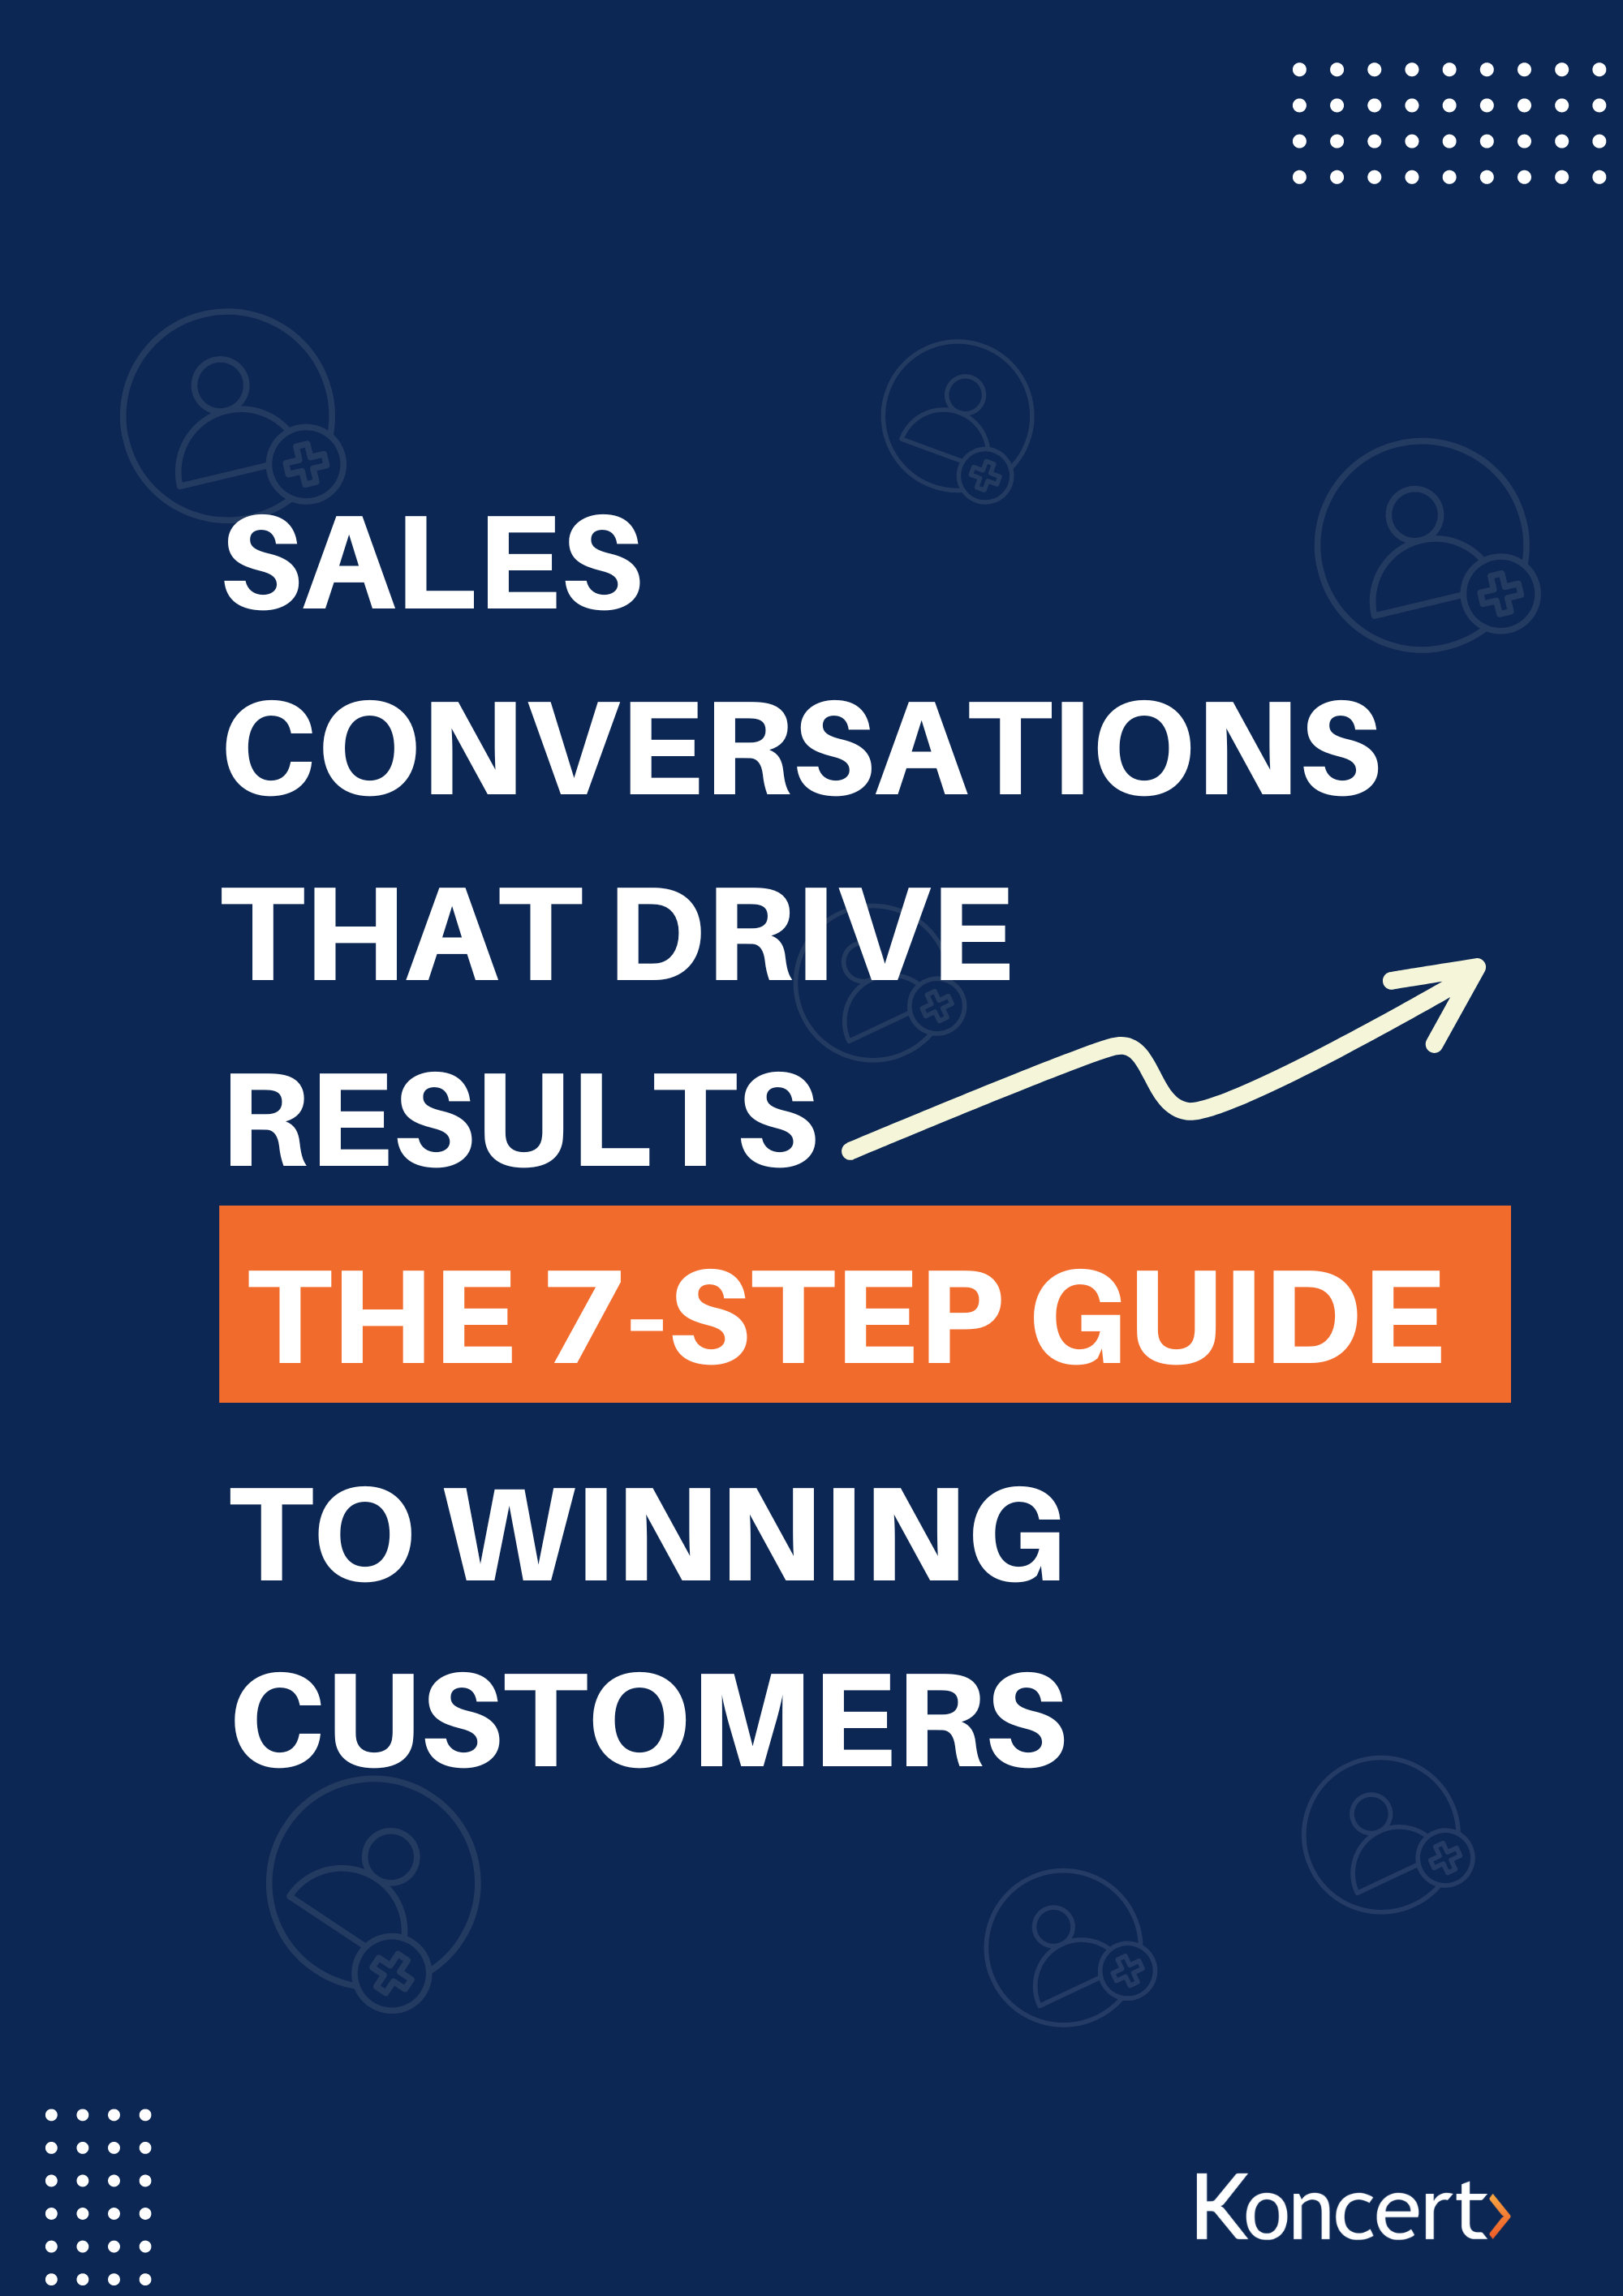 sales-conversation-featured-image-1